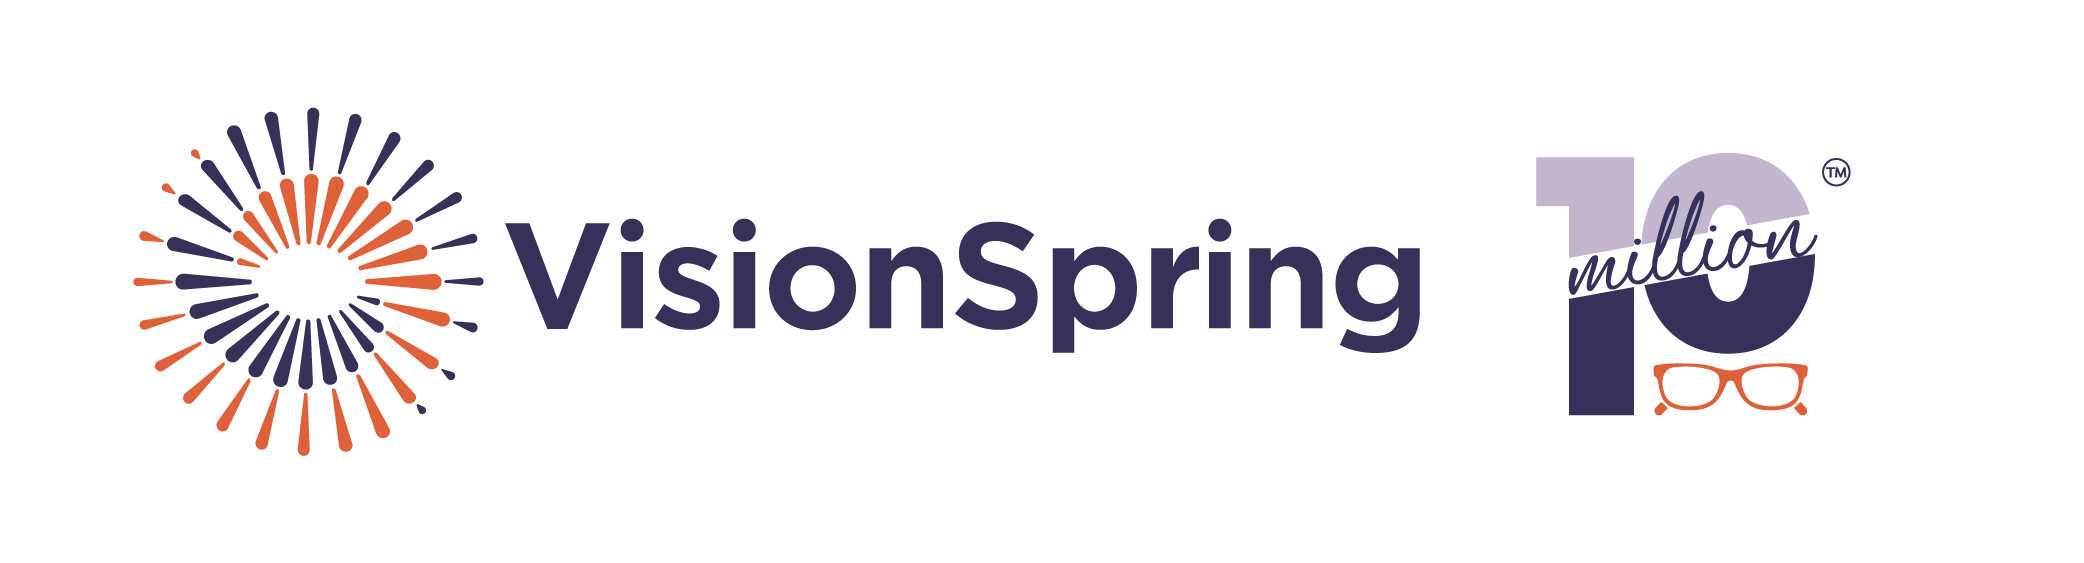 Vision spring program logo